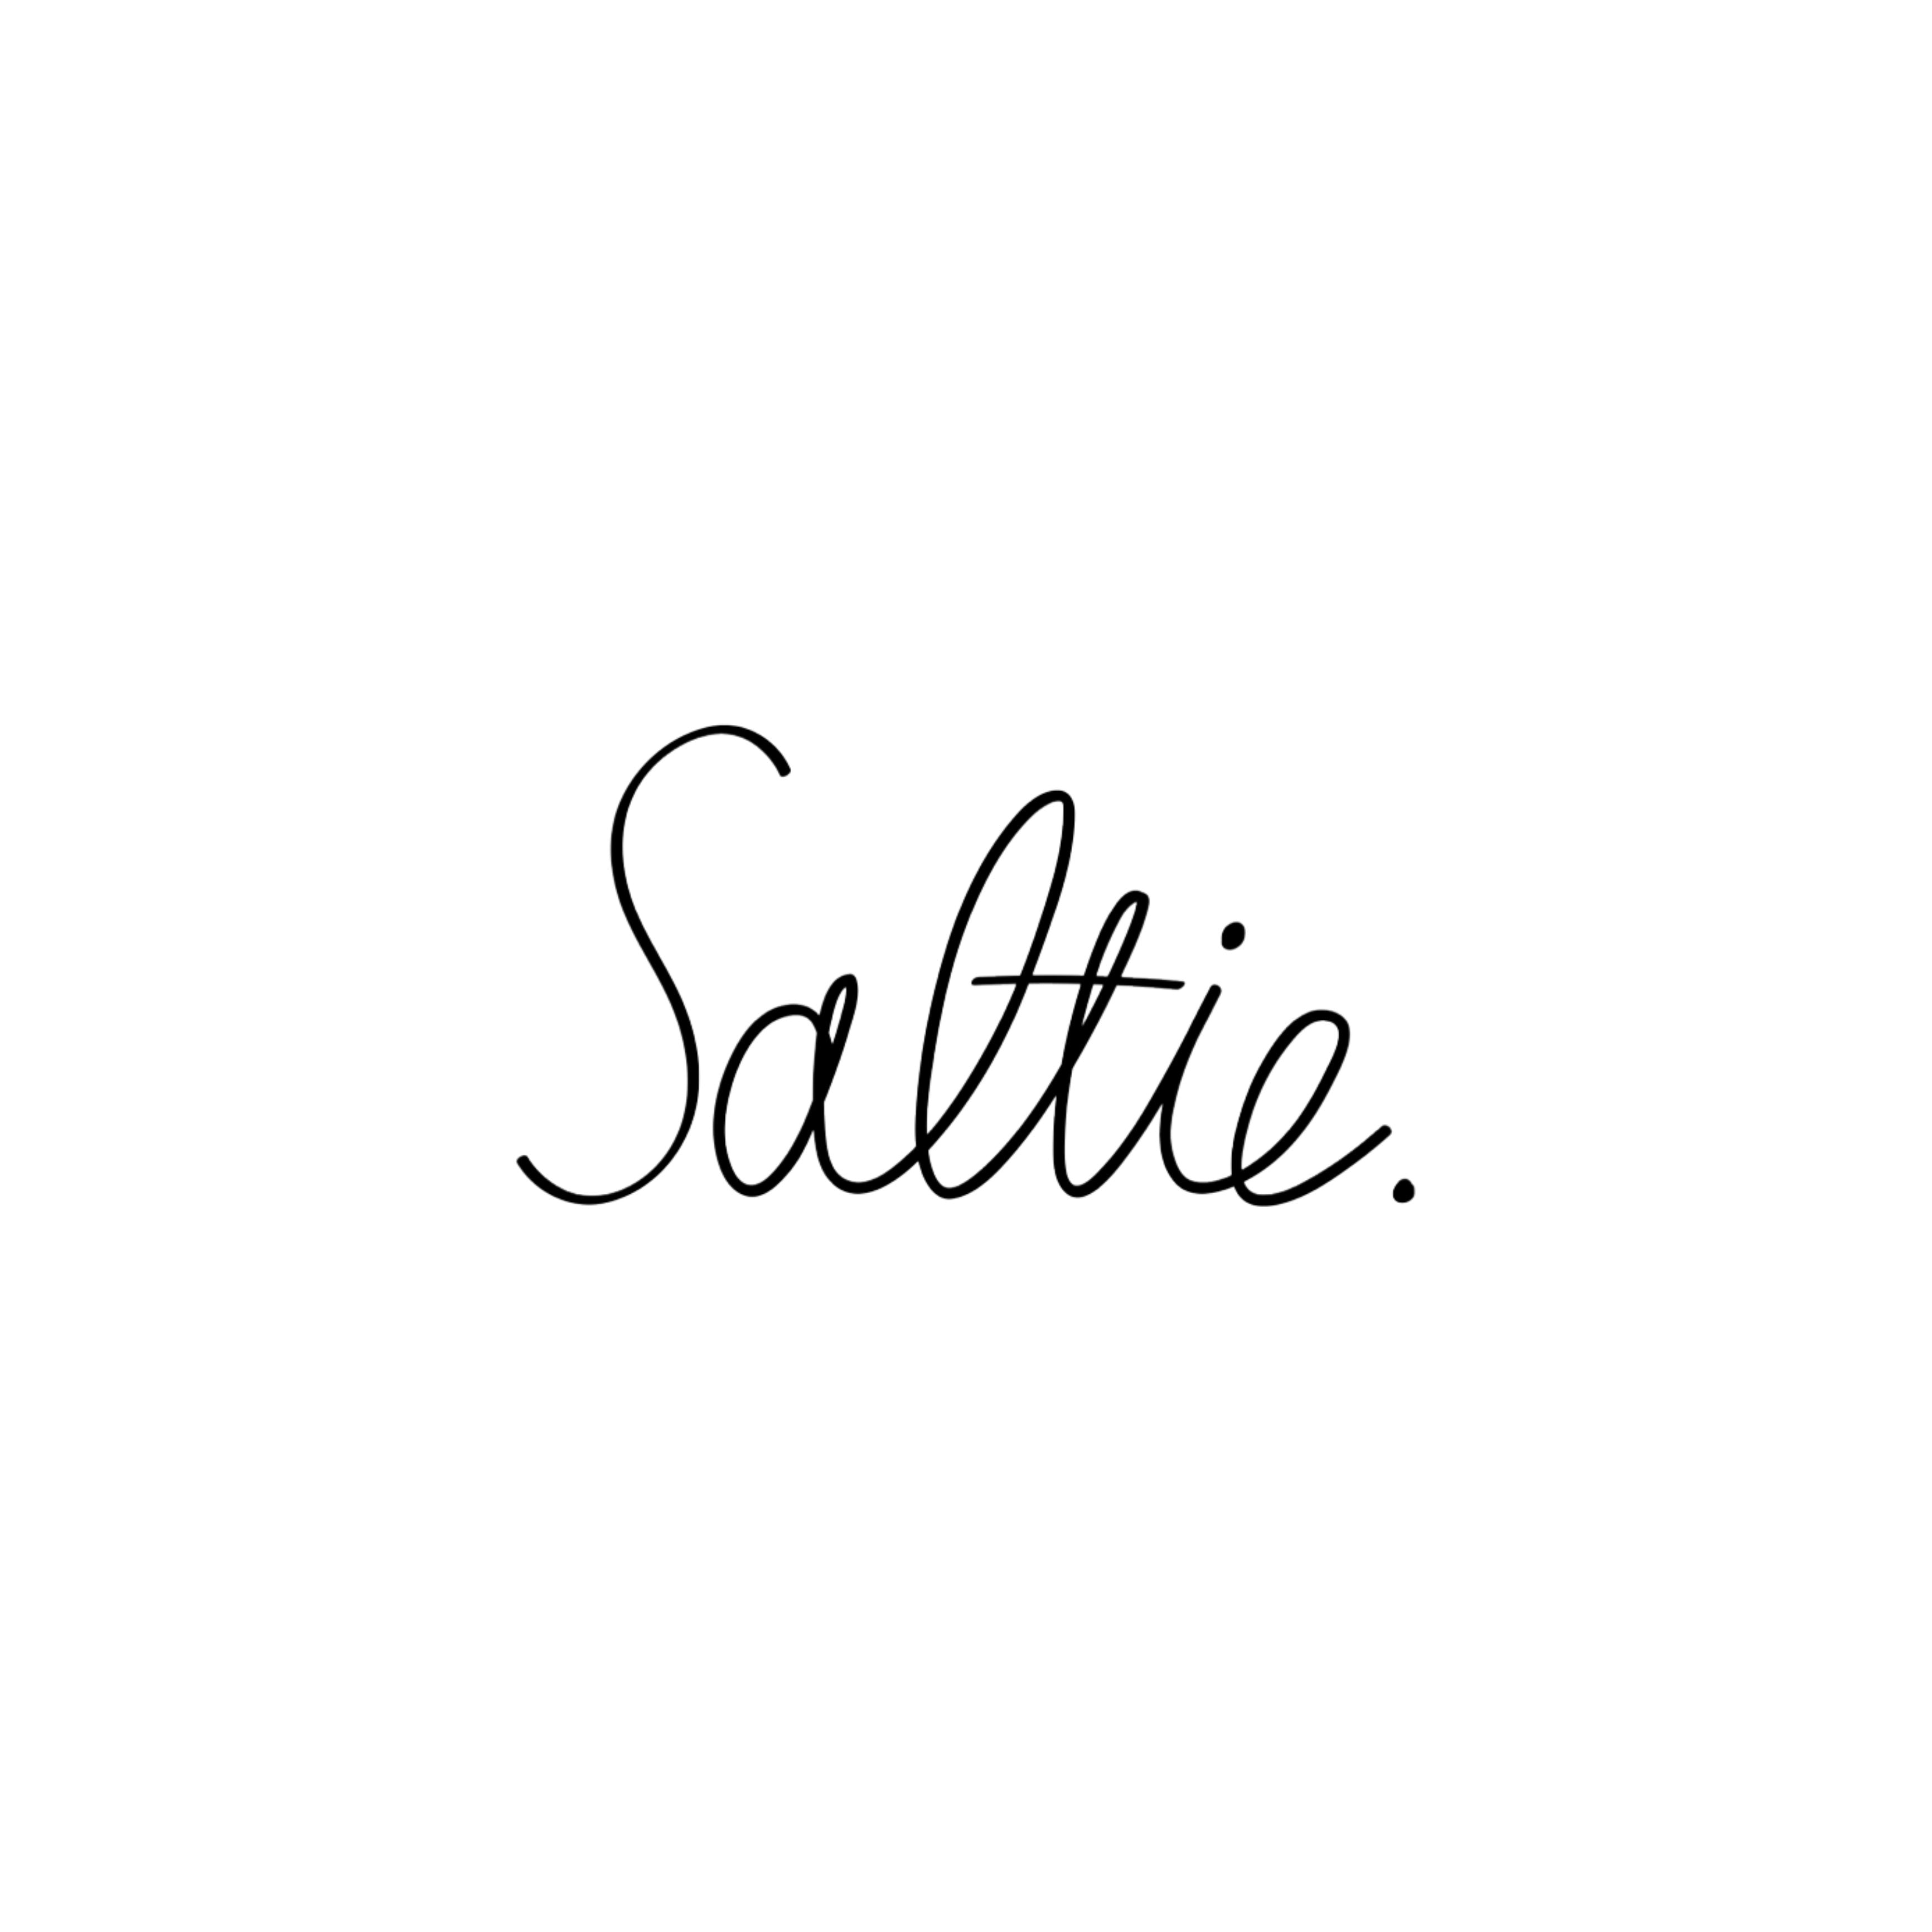 Saltie.